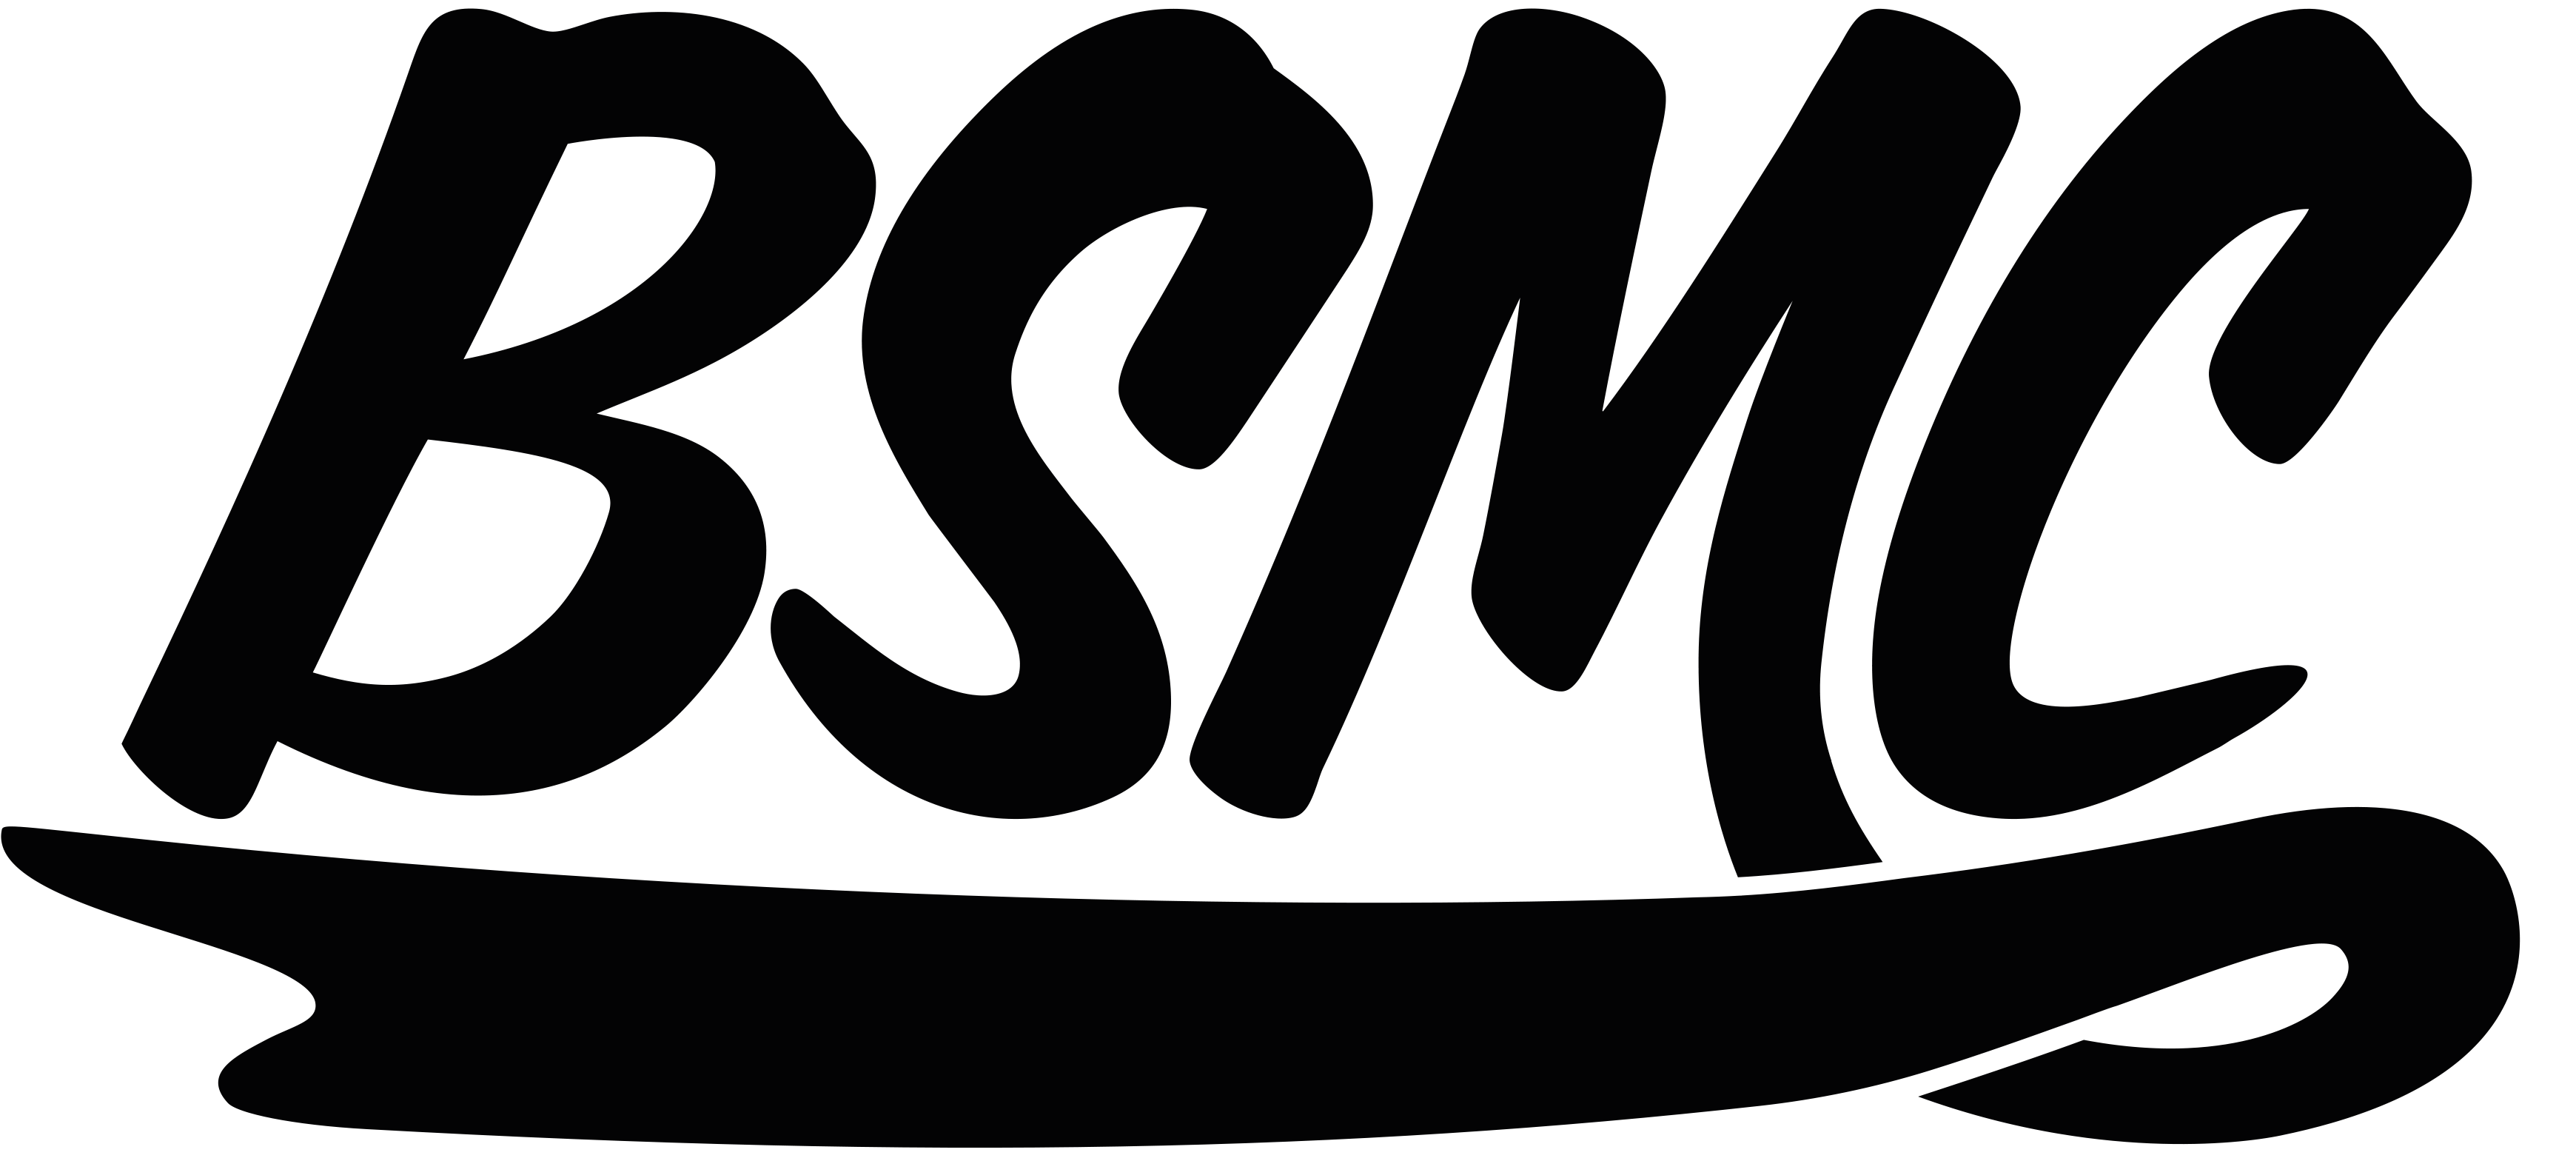 BSMC Logo - BSMC Flat Swoosh 3 Bike Shed